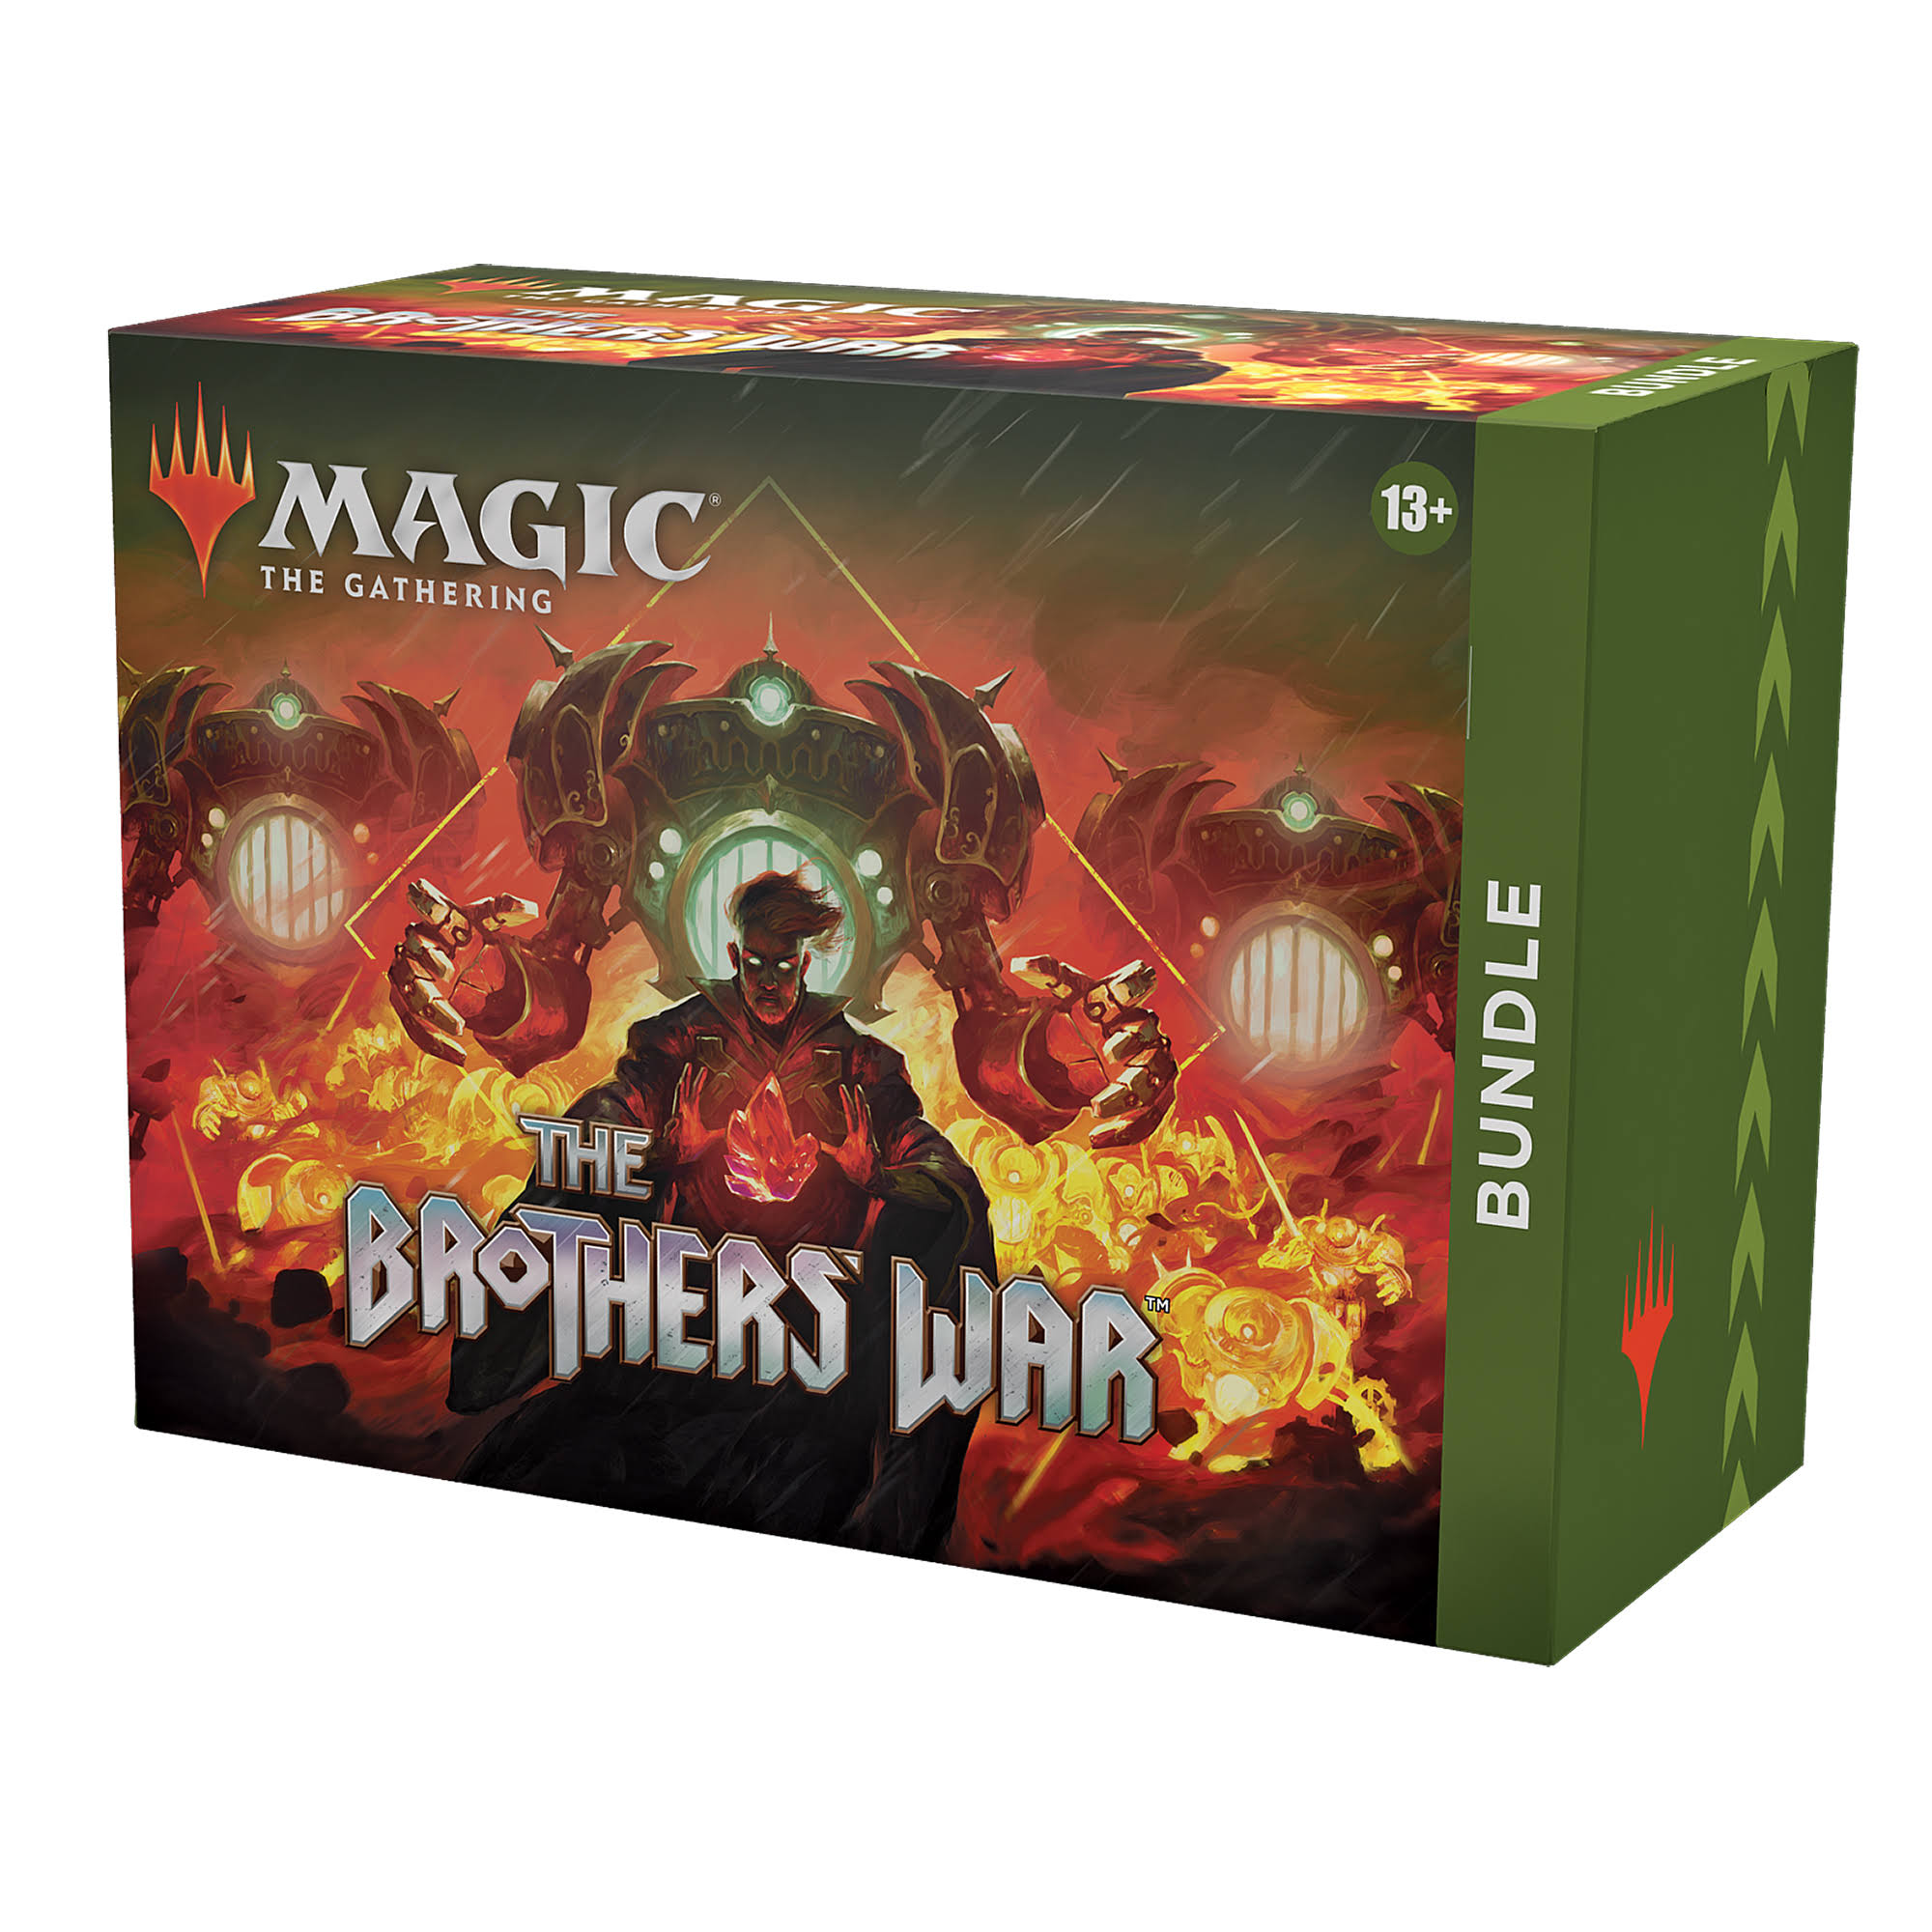 Magic The Gathering - The Brothers War (Bundle)